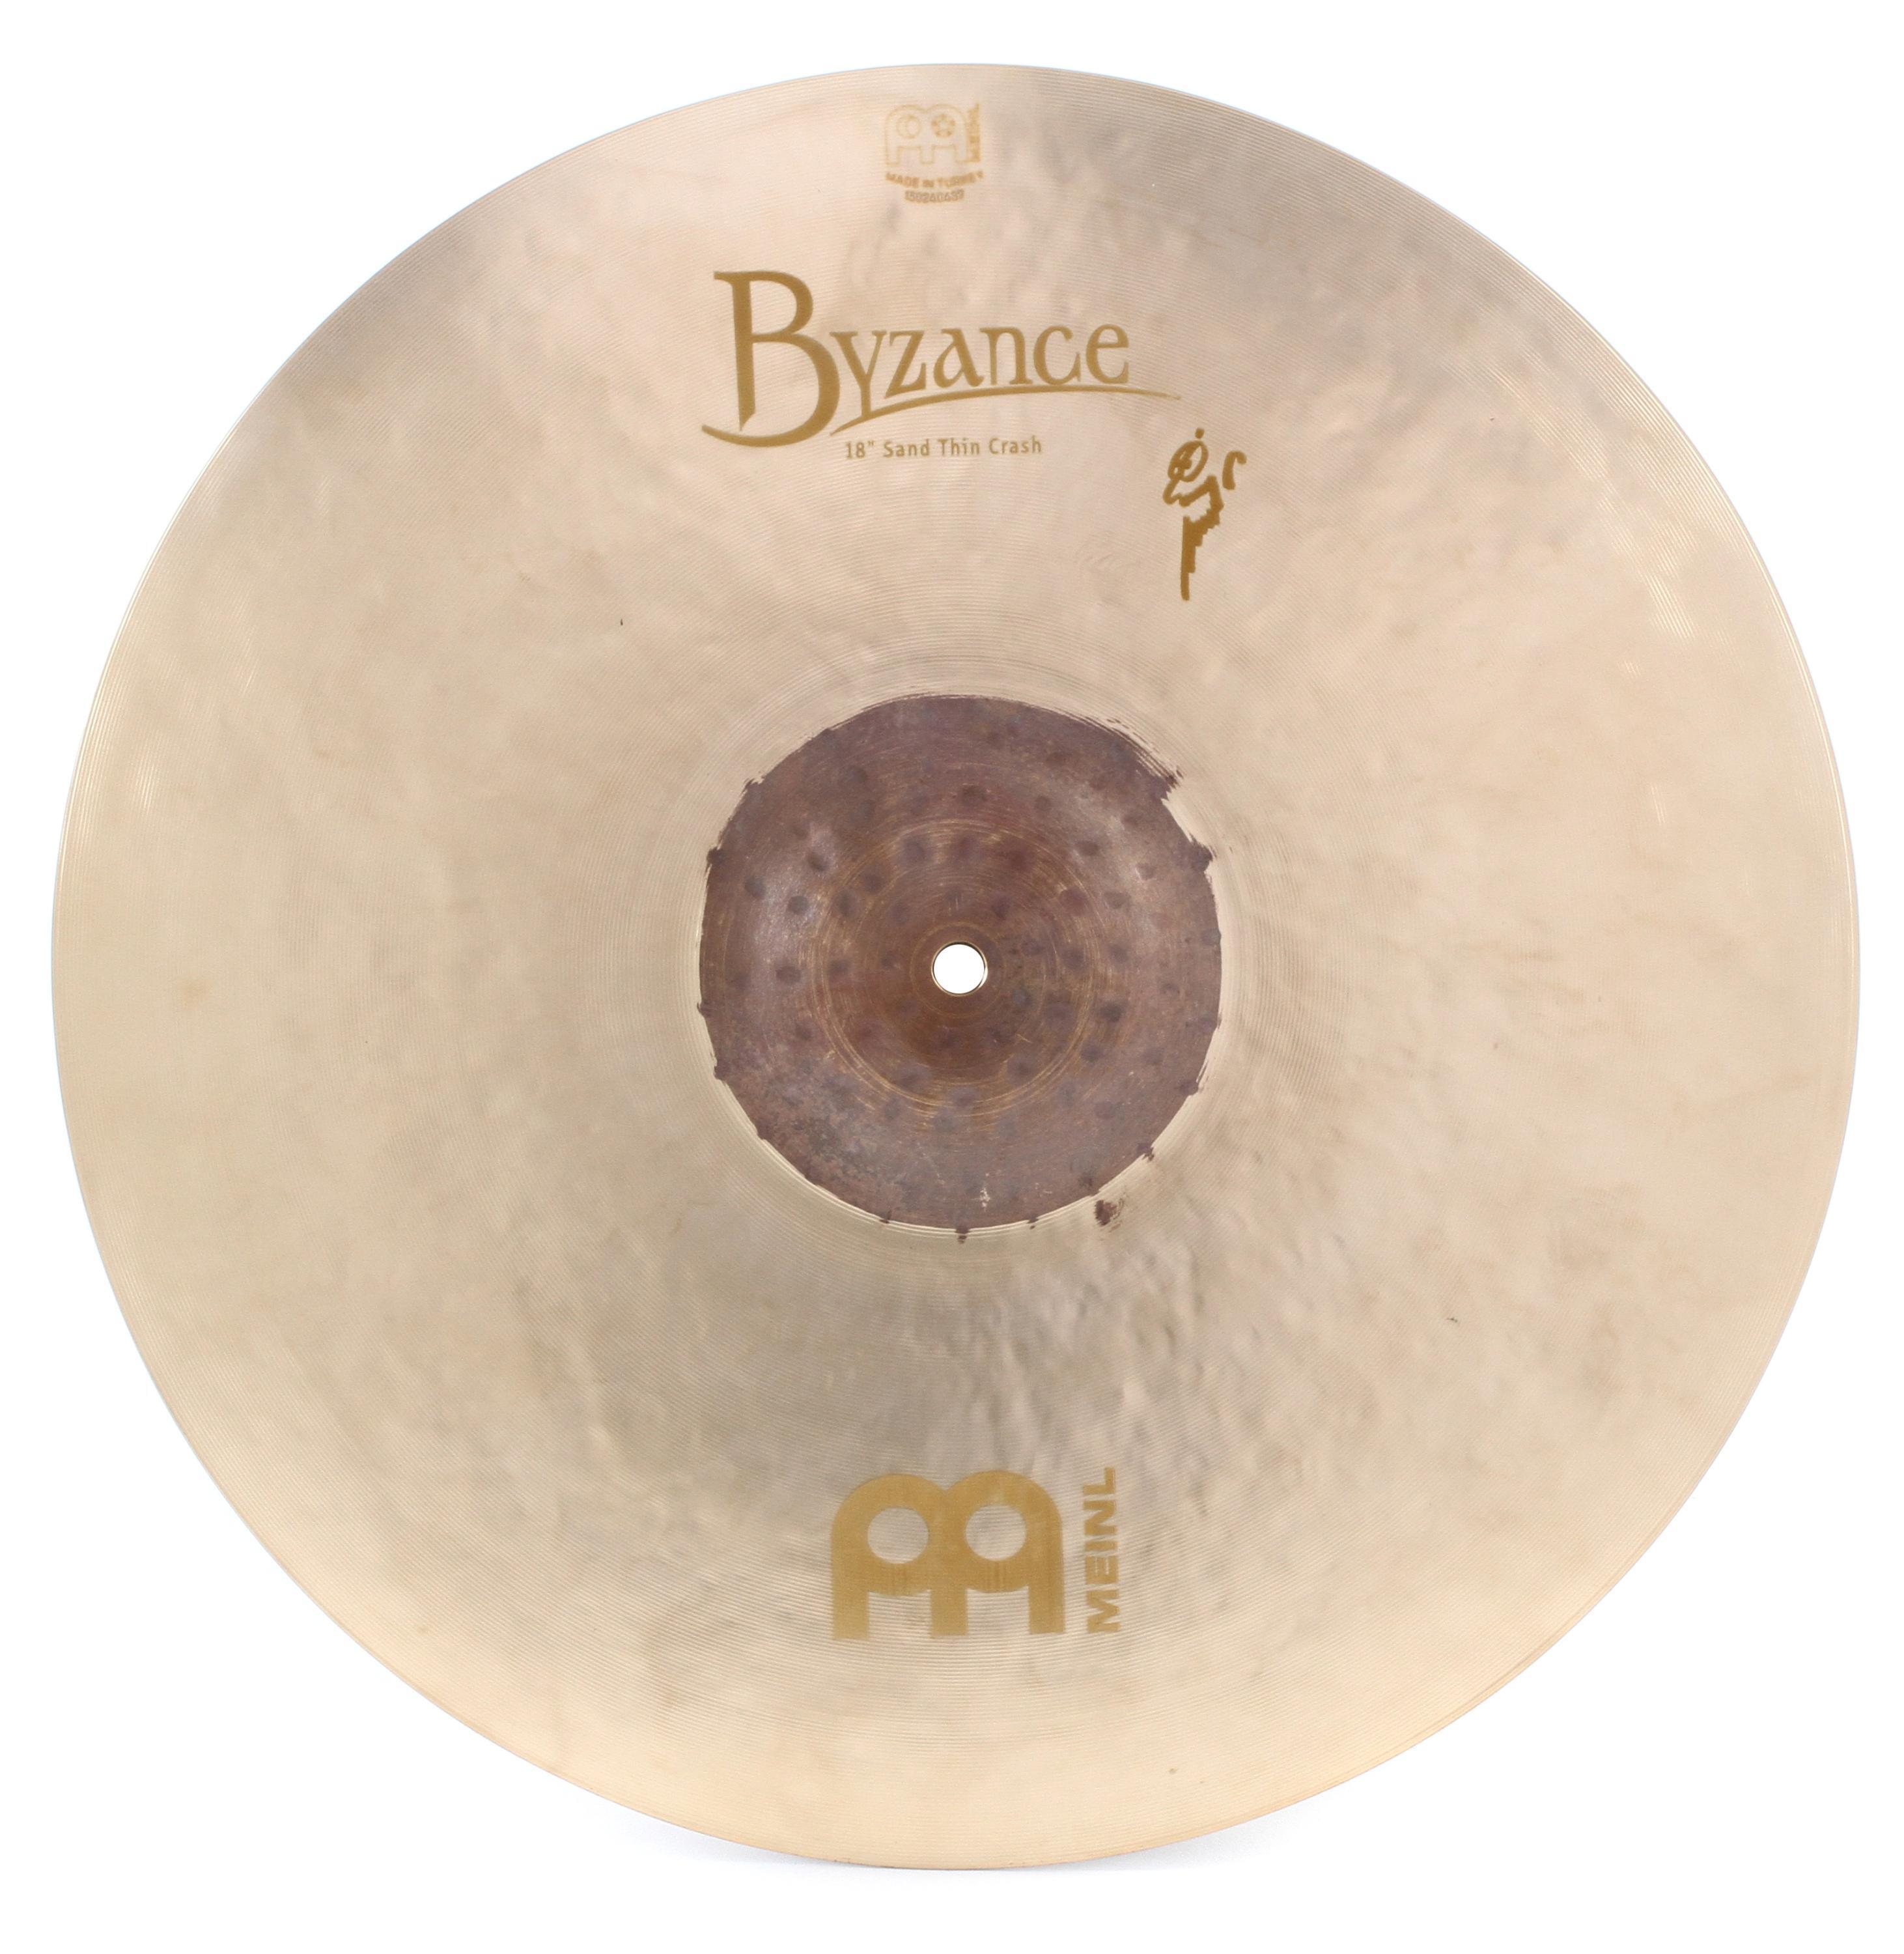 Bundled Item: Meinl Cymbals 18 inch Byzance Vintage Sand Thin Crash Cymbal